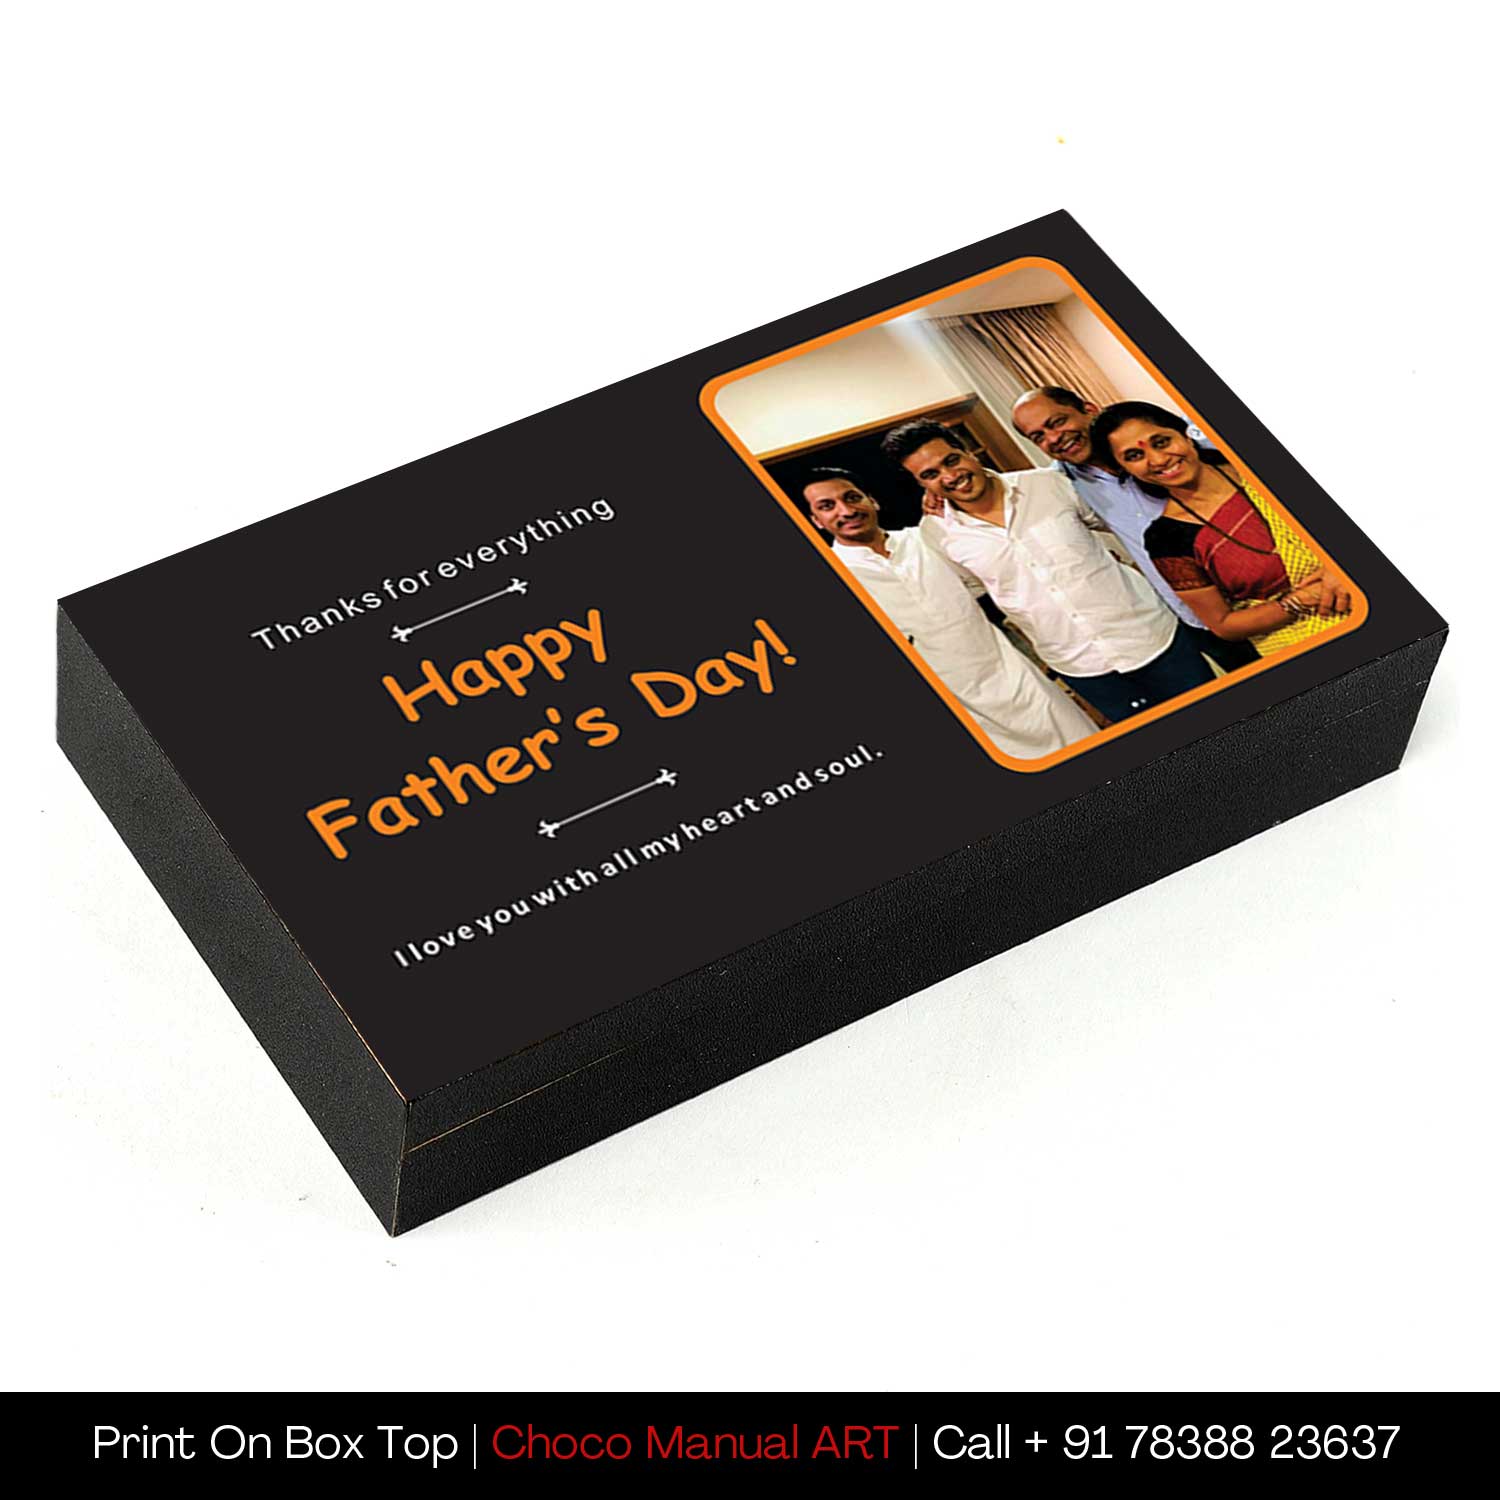 Black Elegant father's day gift box of Printed Chocolates